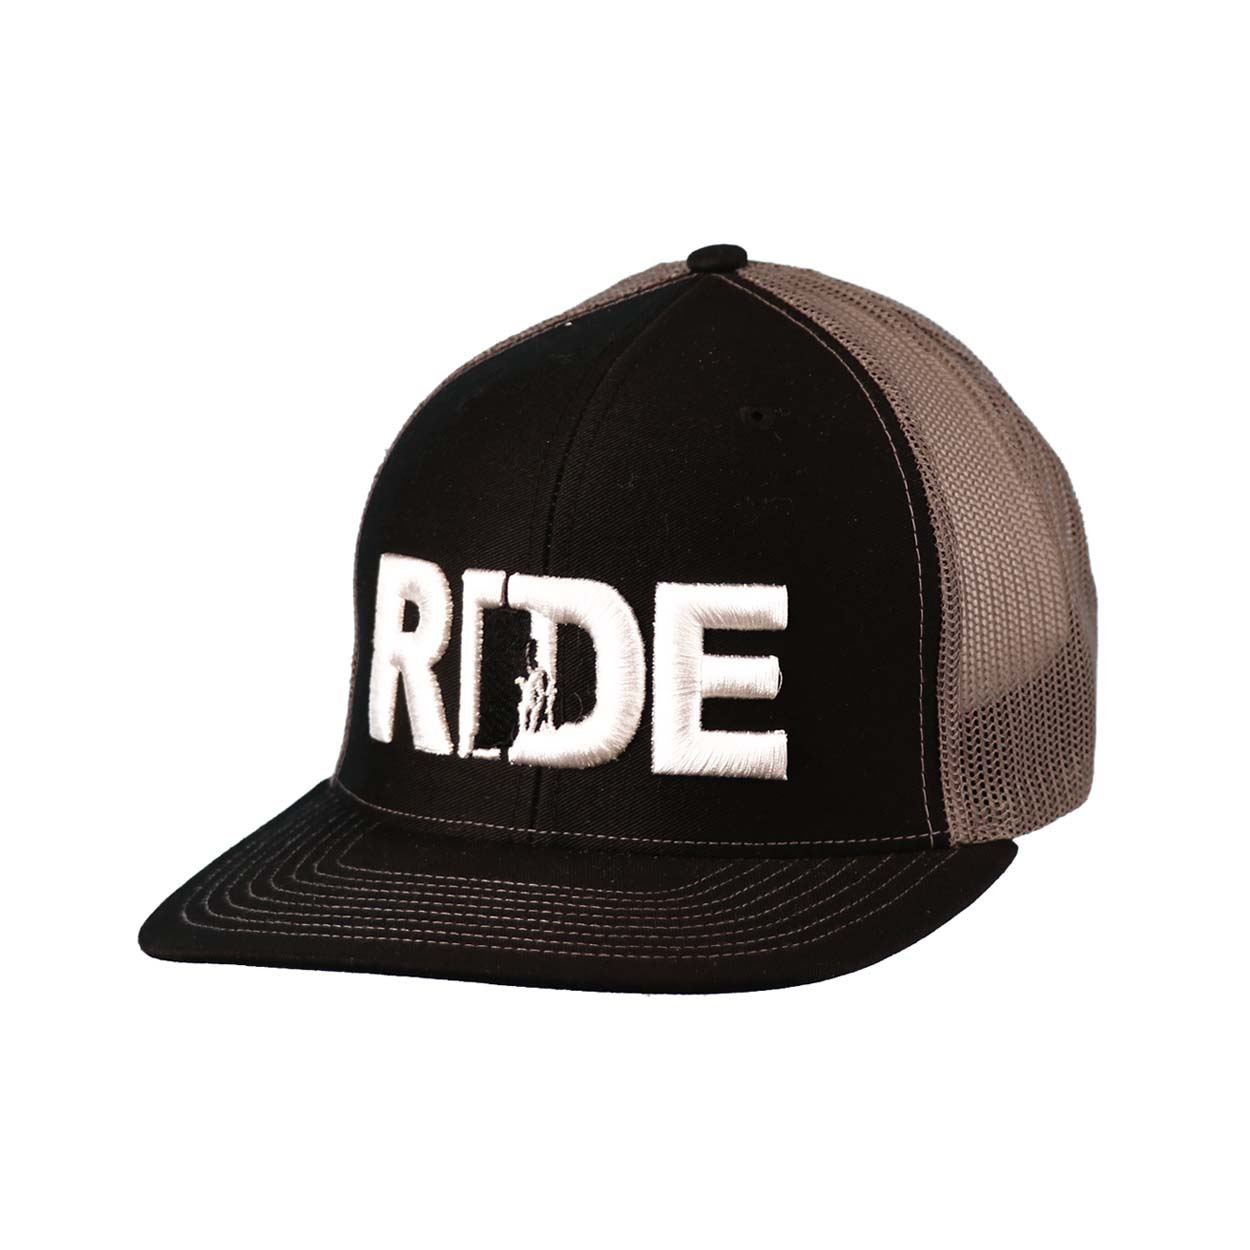 Ride Rhode Island Classic Embroidered Snapback Trucker Hat Black/Gray